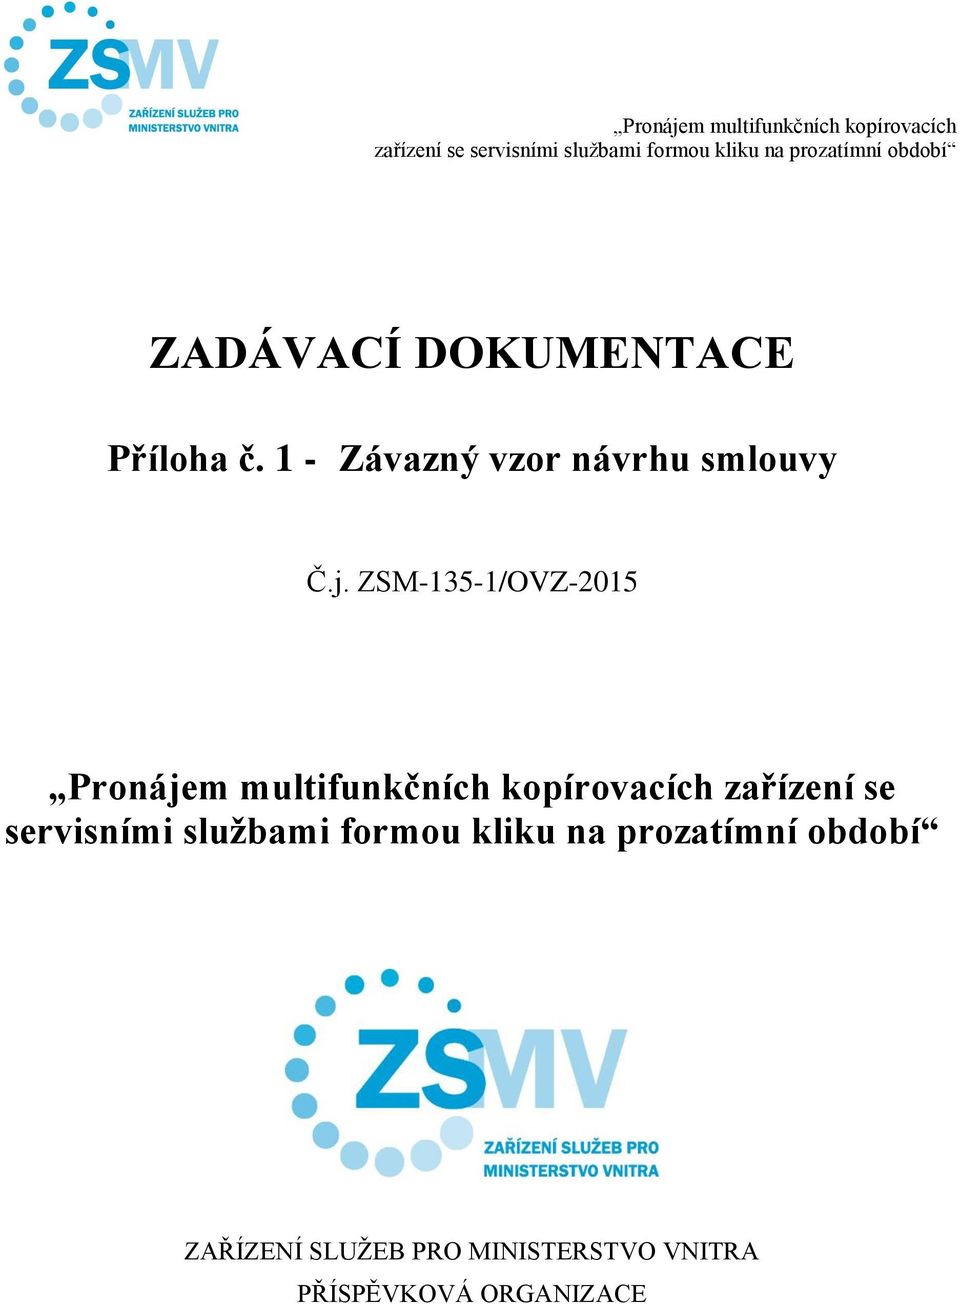 ZSM-135-1/OVZ-2015 se servisními službami formou kliku na